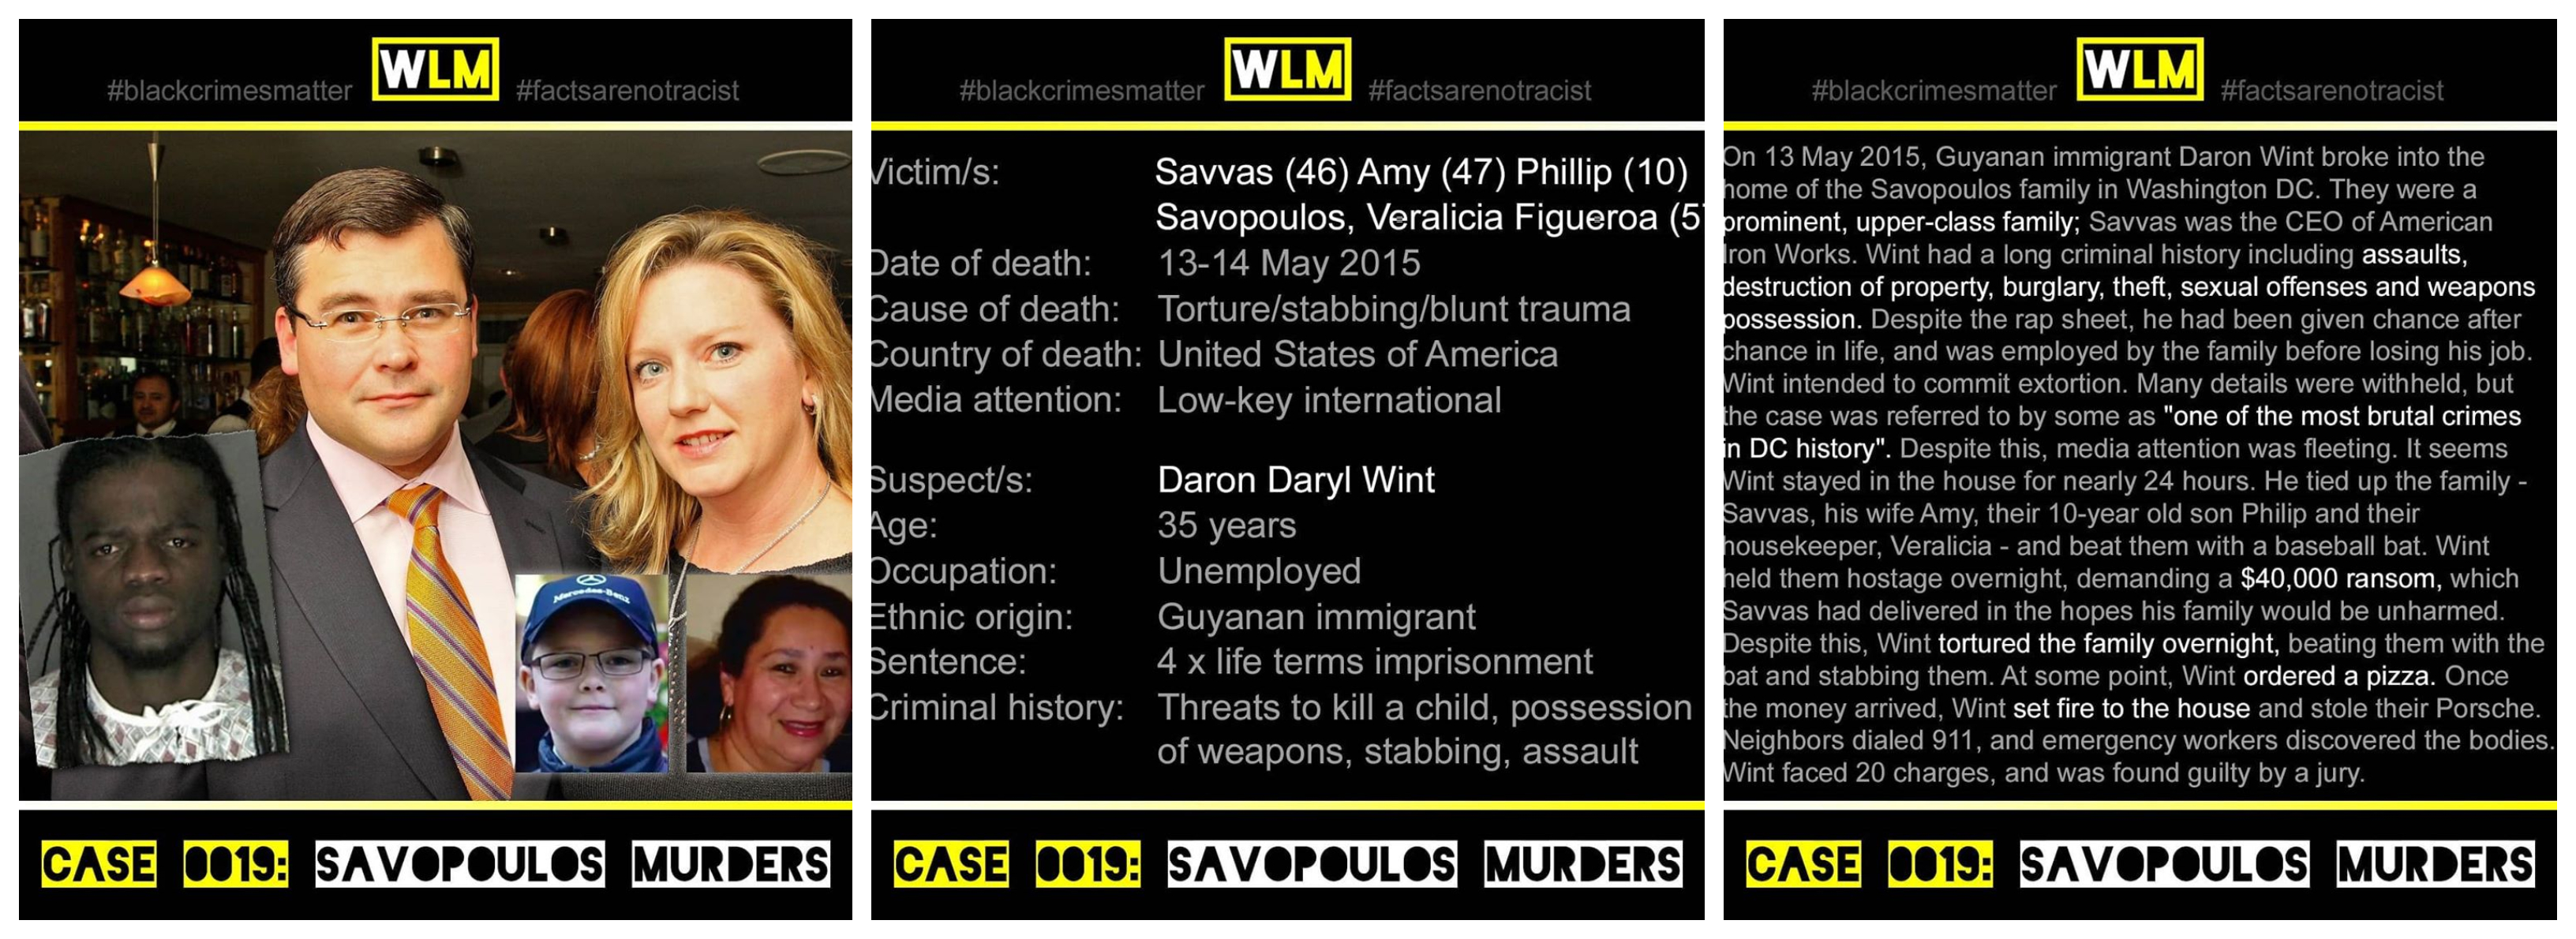 case-019-savopoulos-murders